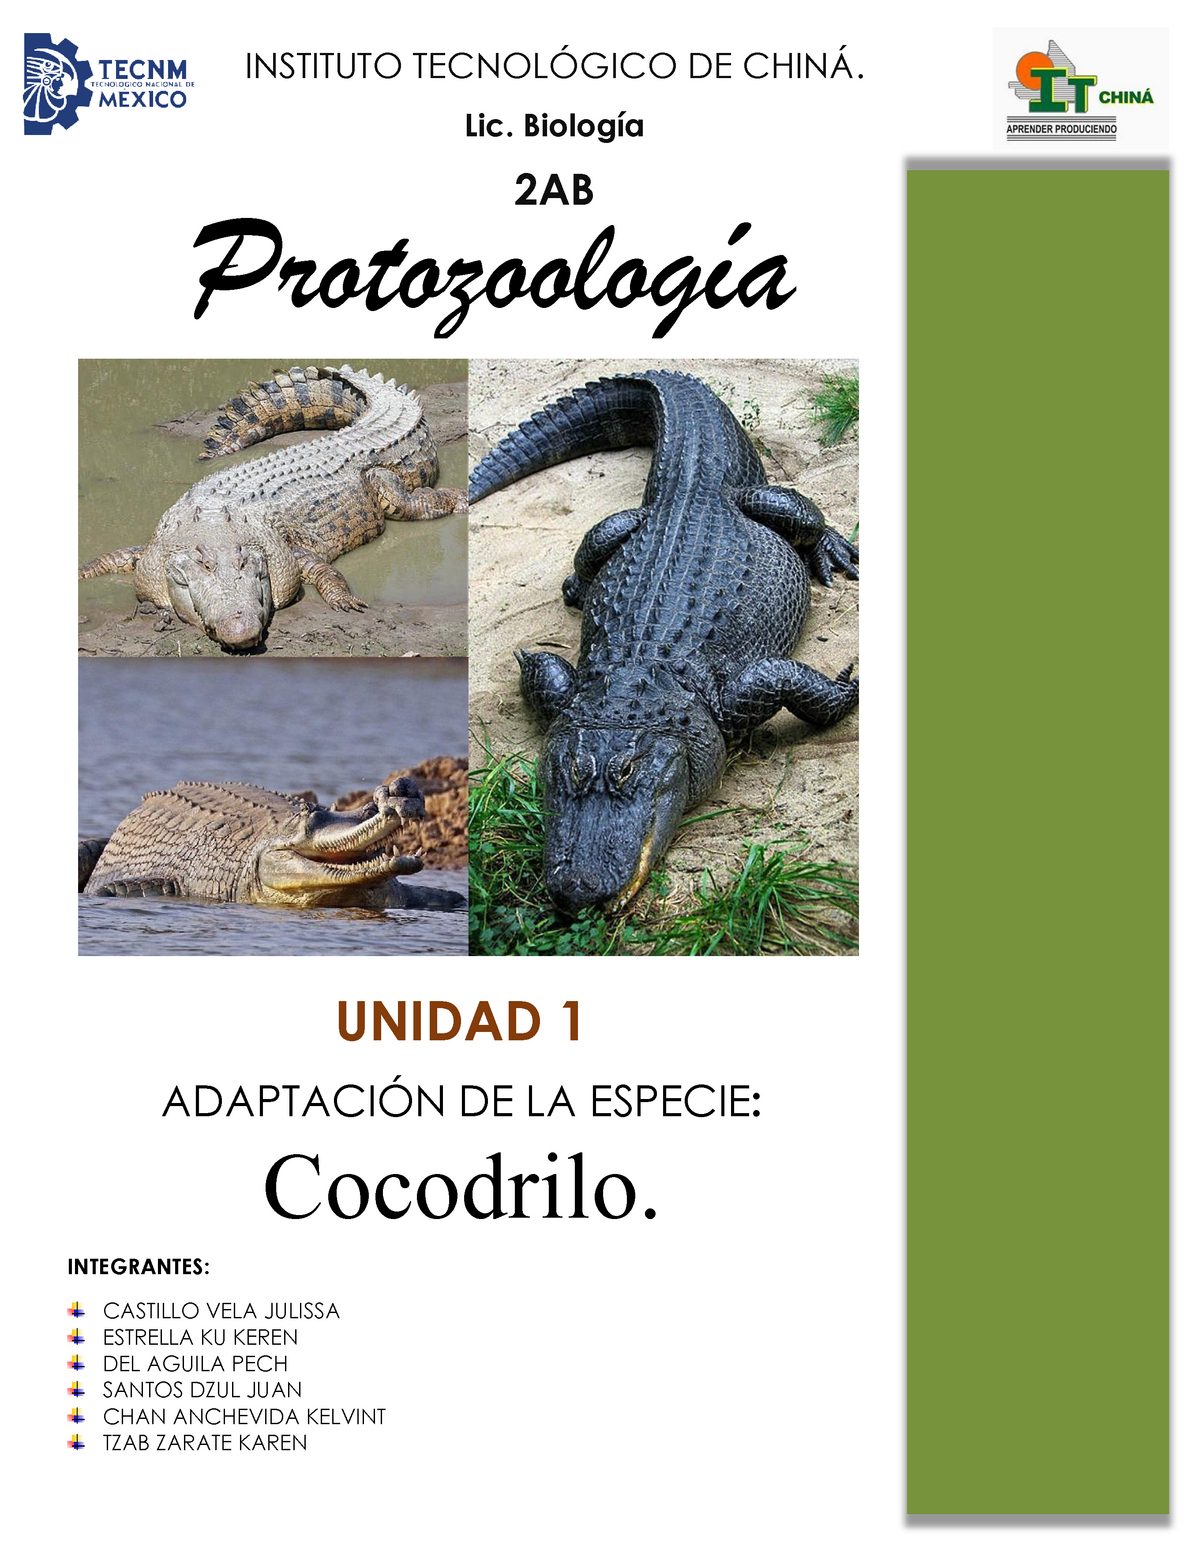 Protozoologia Cocodrilo 2 - INSTITUTO DE Lic. 2AB UNIDAD 1 DE LA ESPECIE:  Cocodrilo. INTEGRANTES: - Studocu